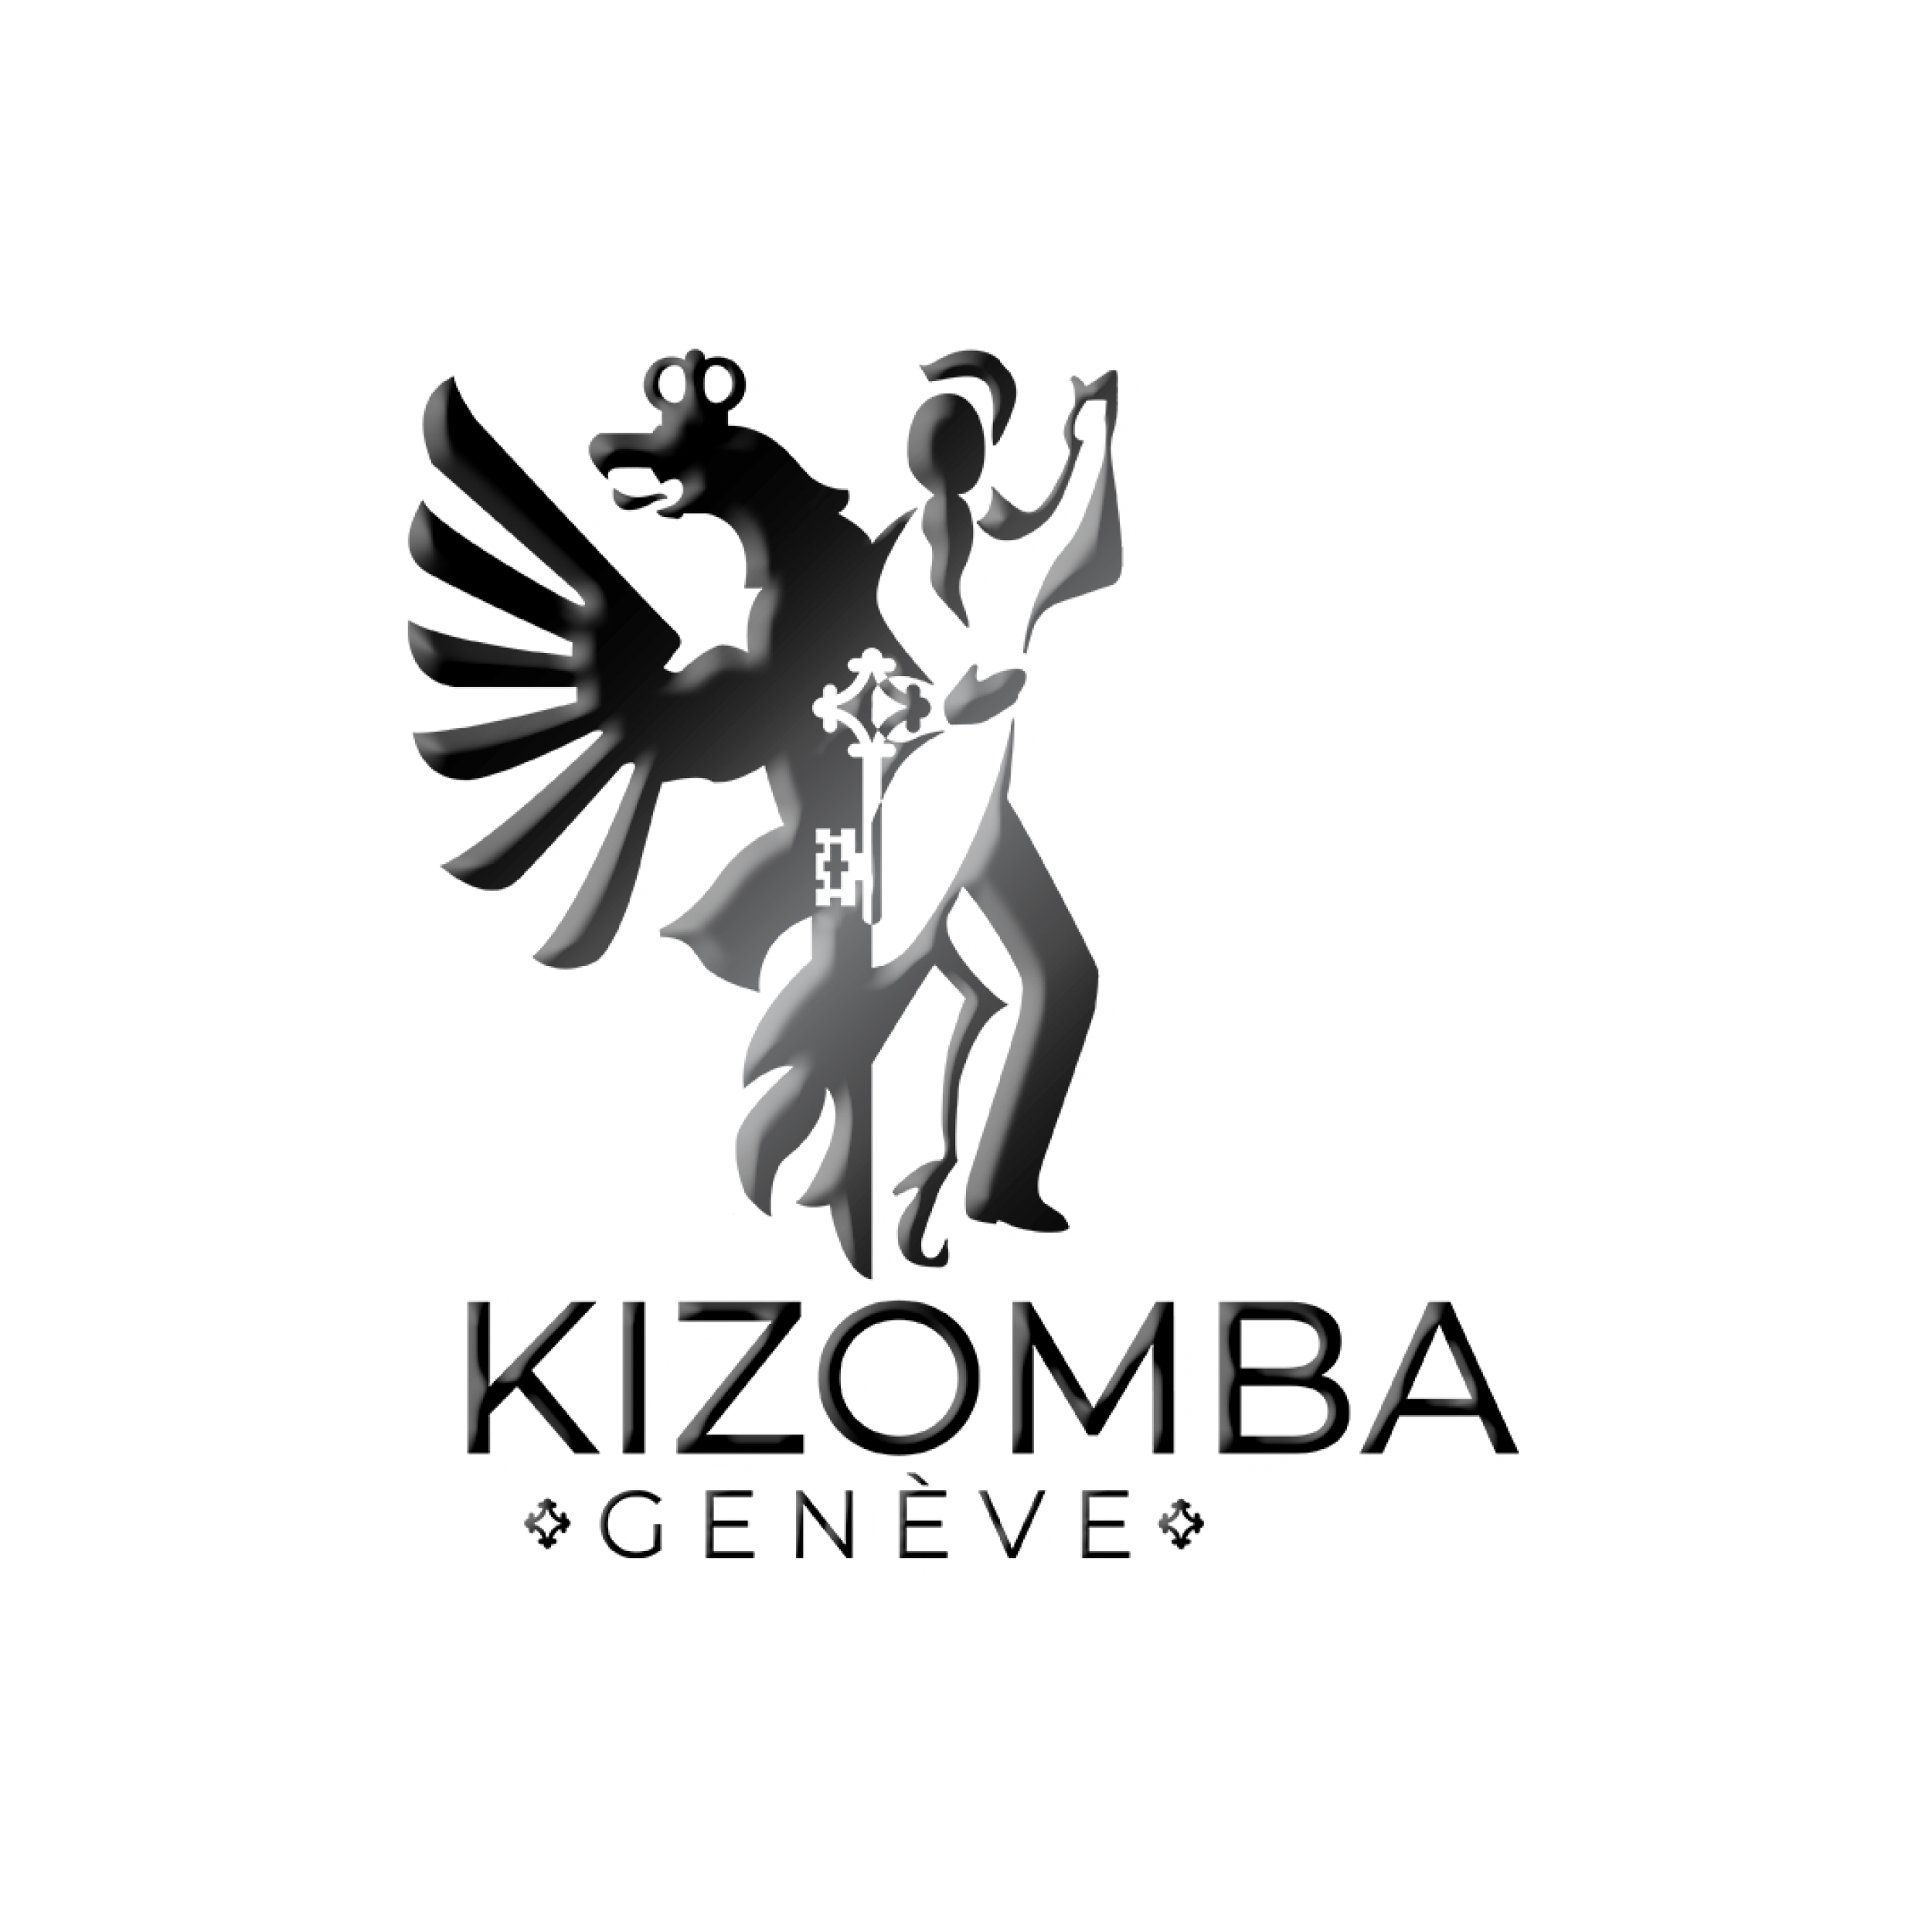 Kizomba Genève - Logo noir texturisé pour fond blanc Texturisé noir